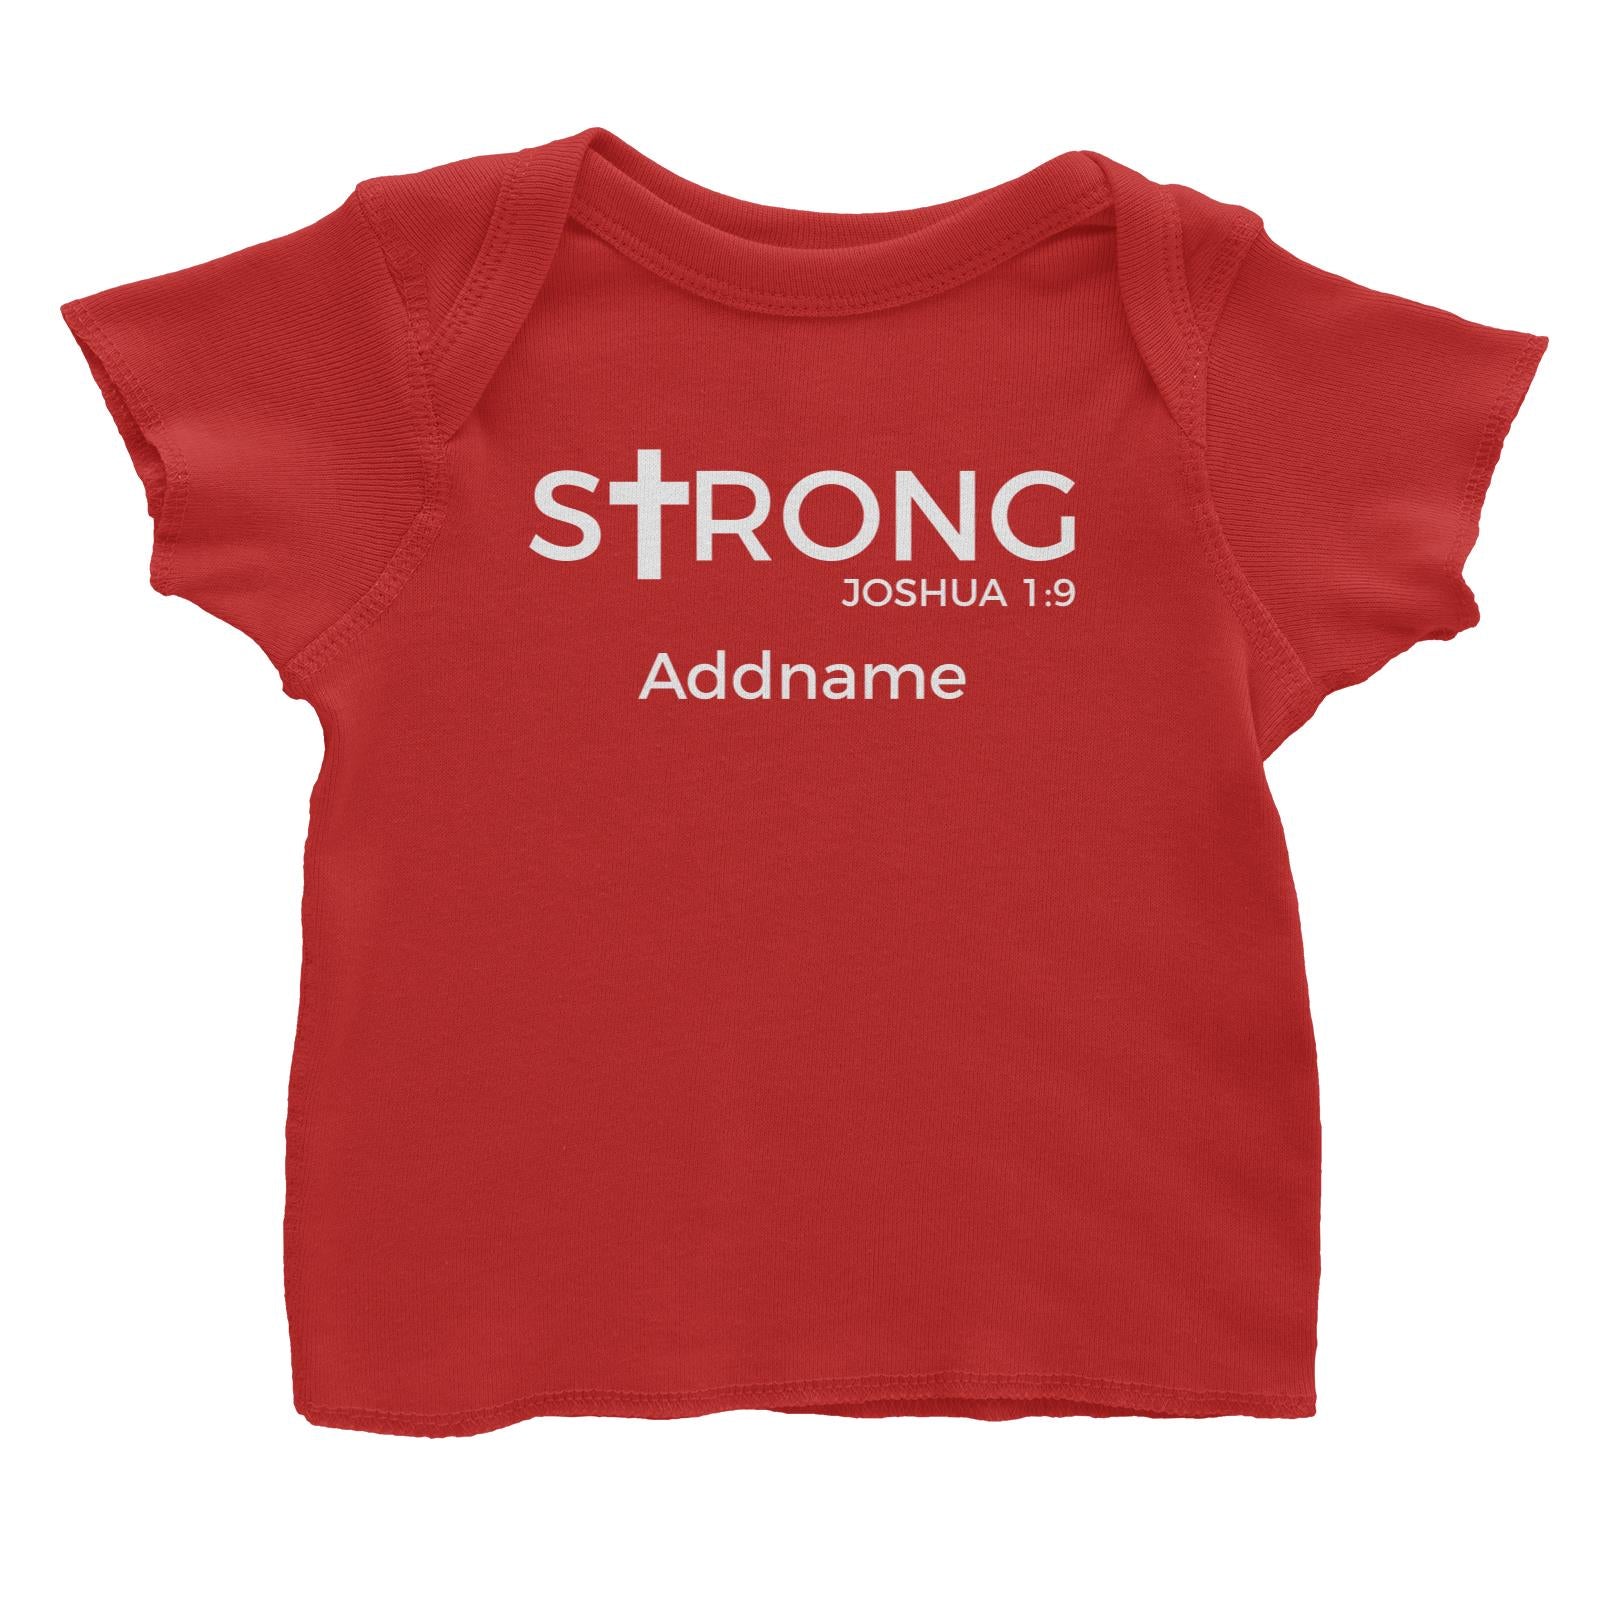 Christian Series Strong Joshua 1.9 Addname Baby T-Shirt